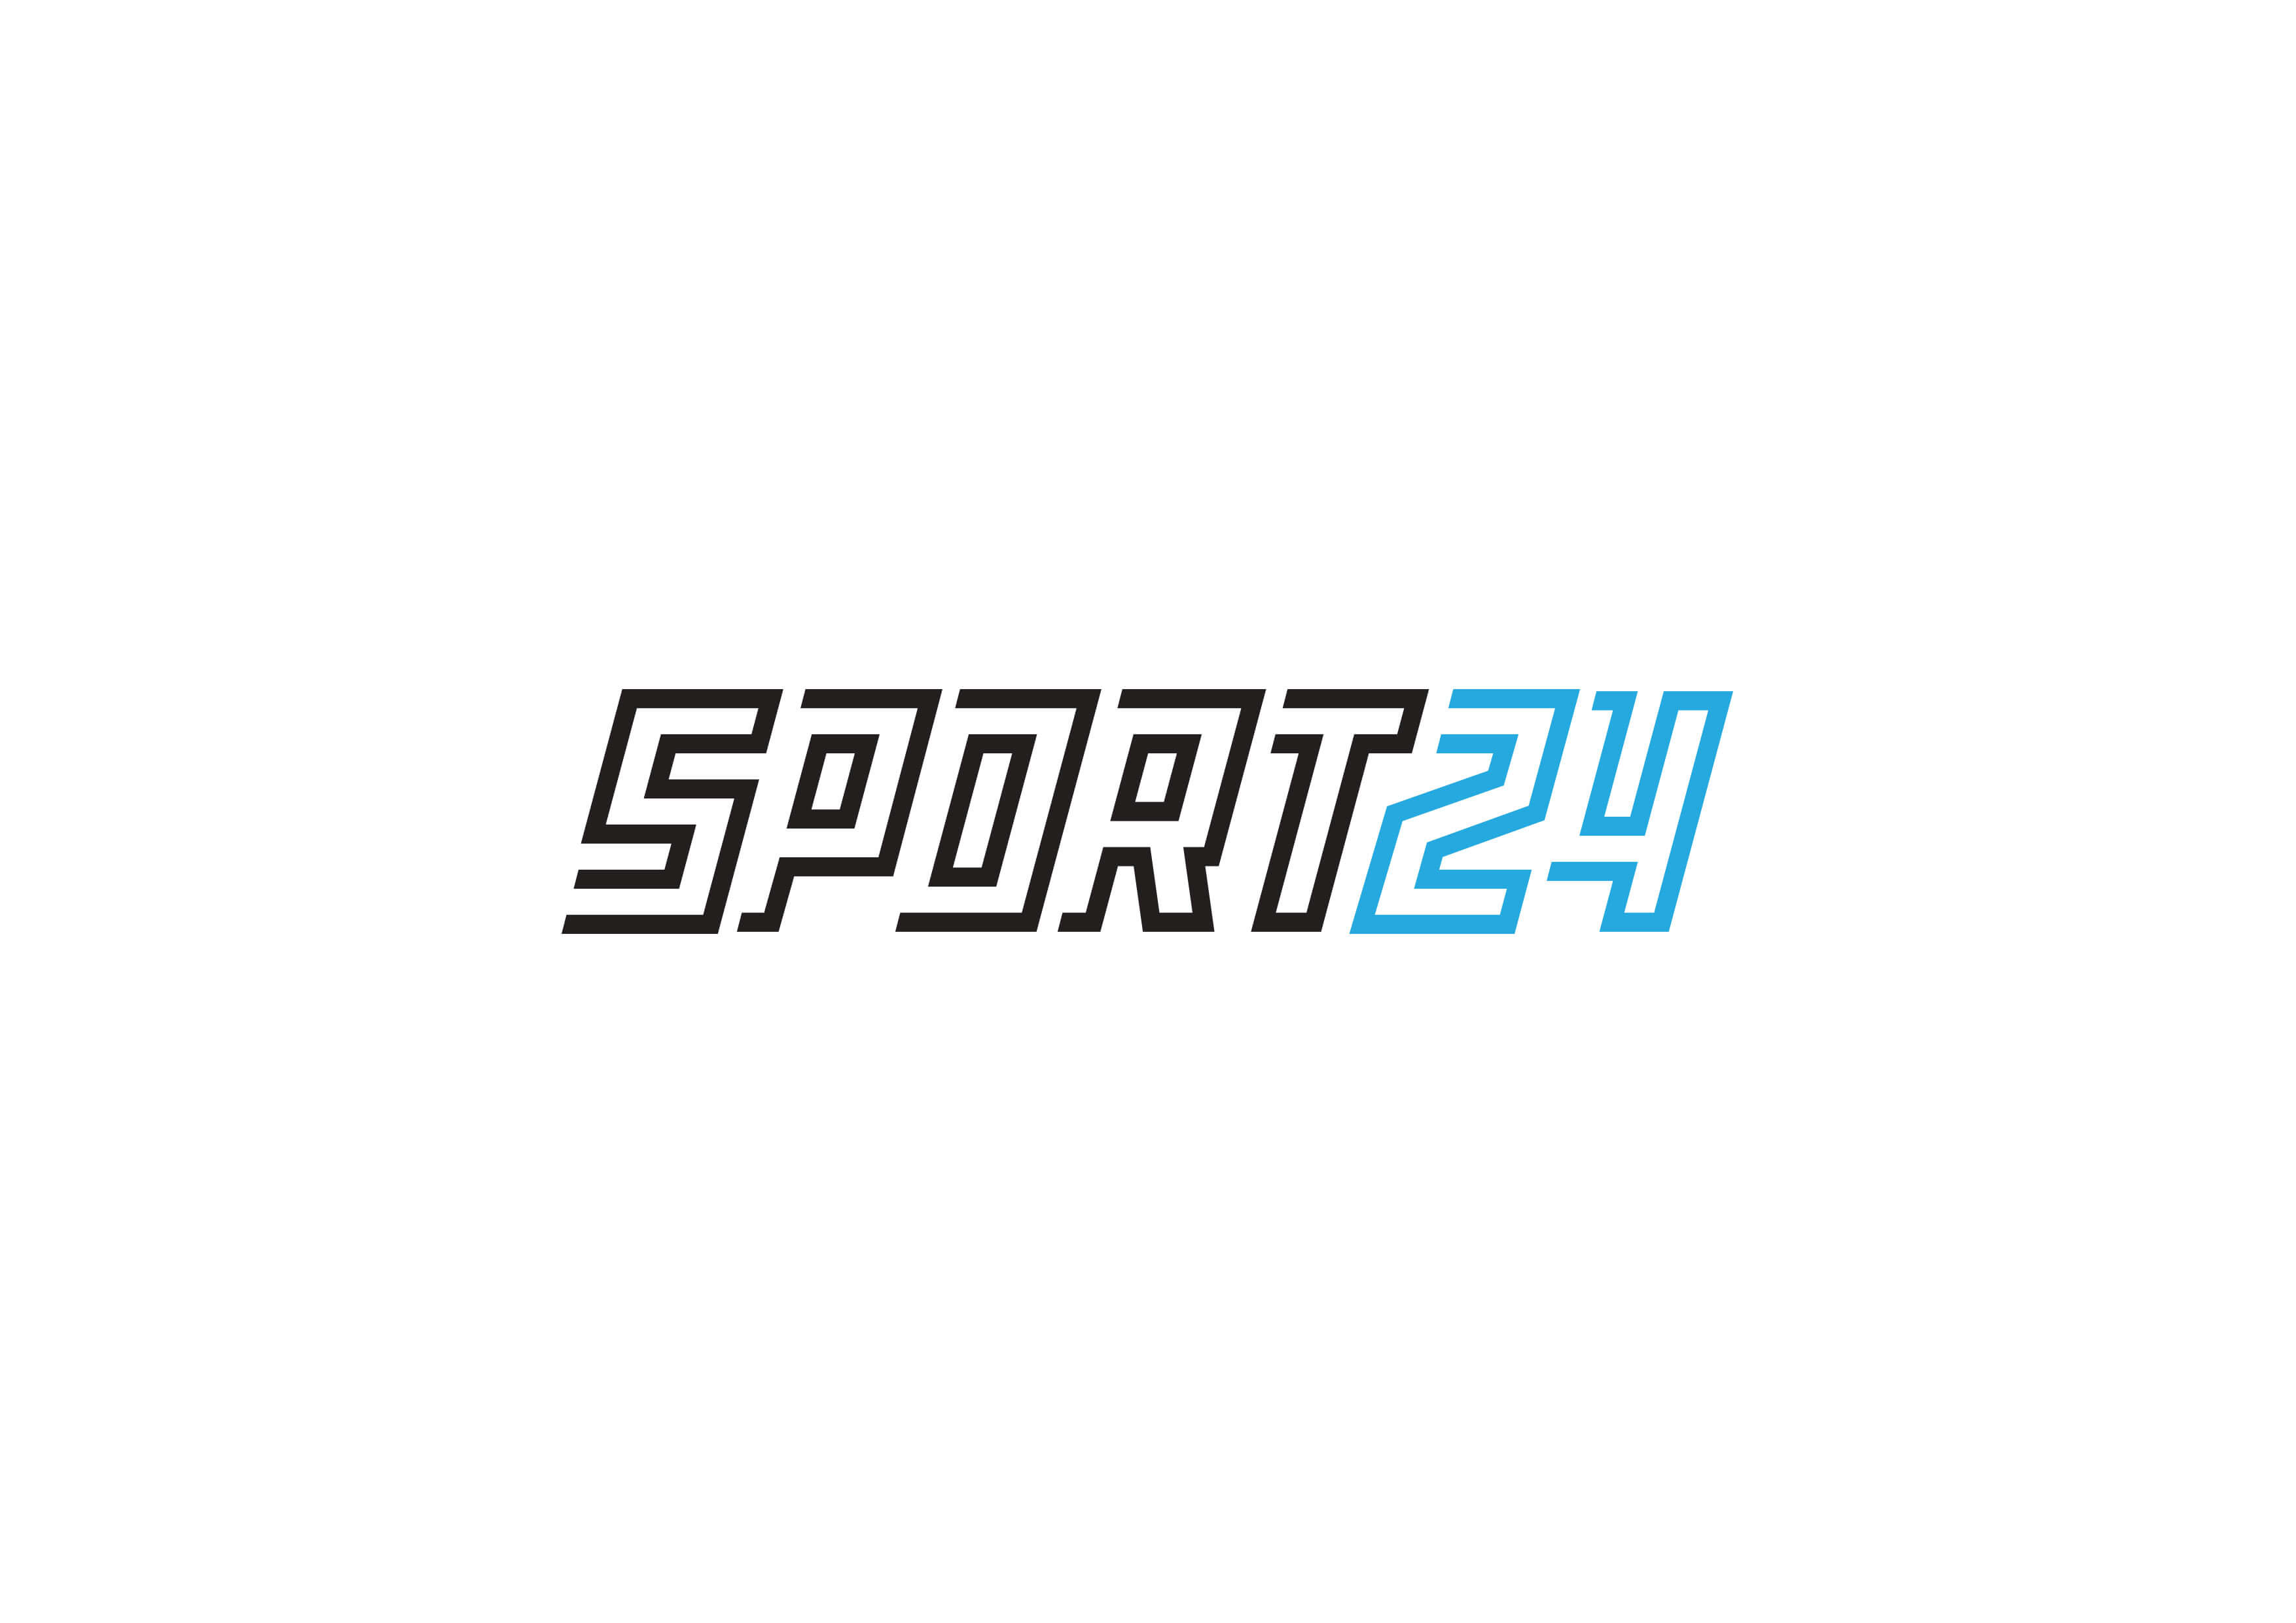 sport24 identity process 08